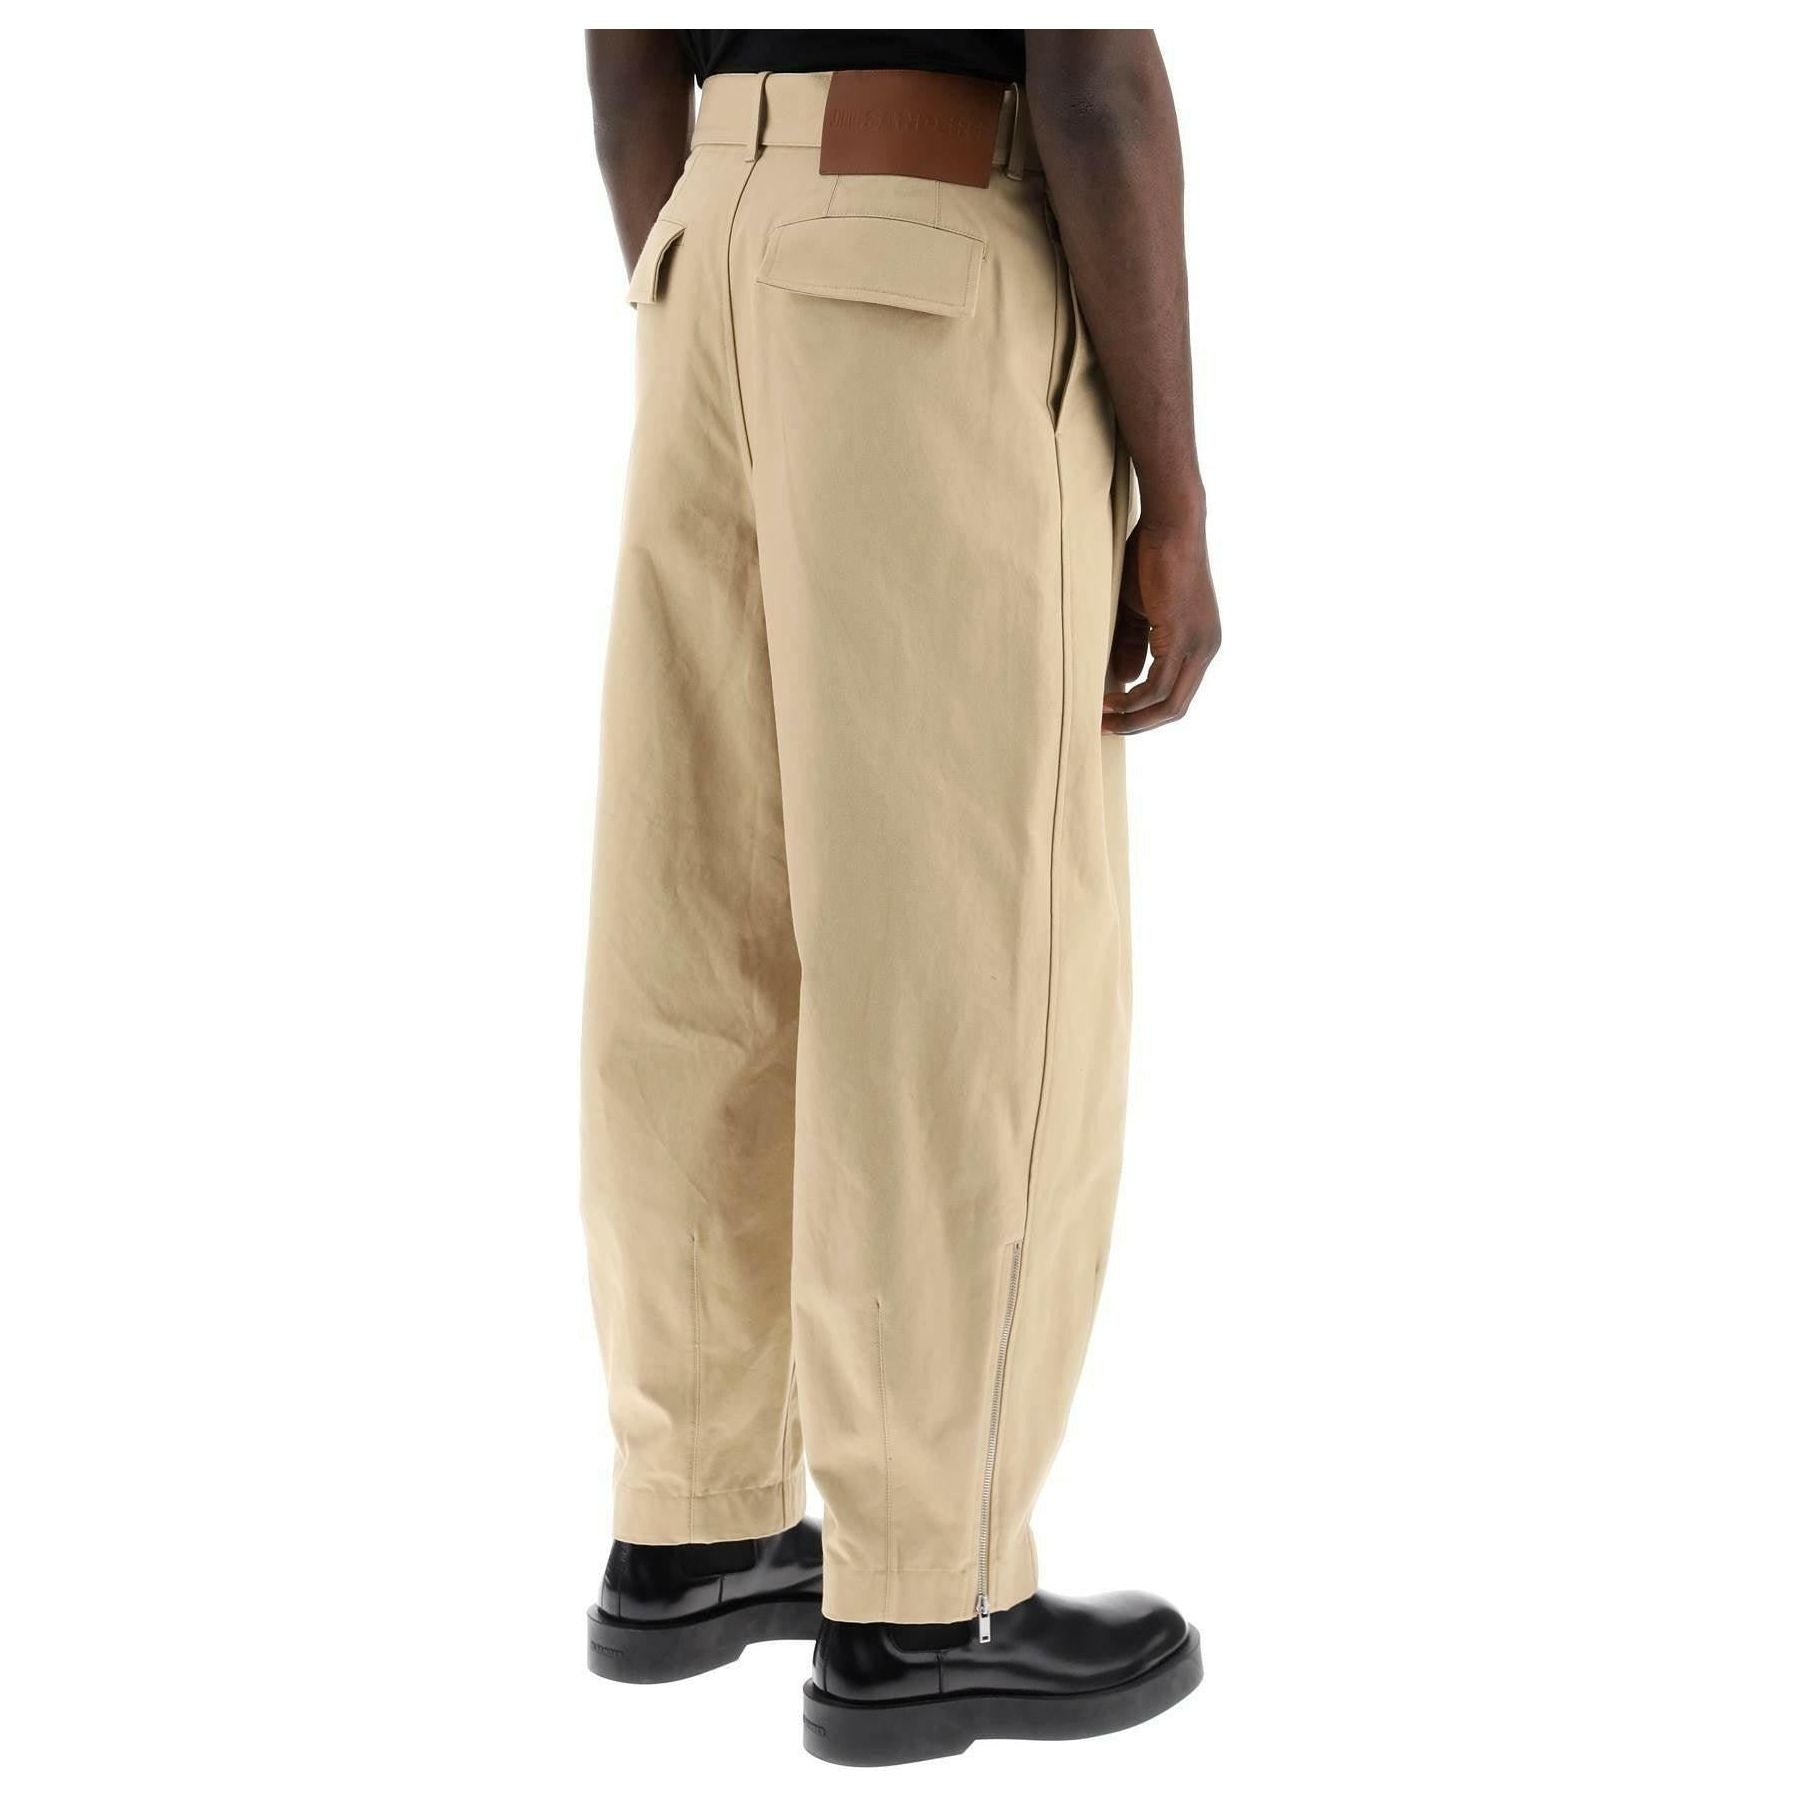 Cotton Pants With Removable Belt JIL SANDER JOHN JULIA.